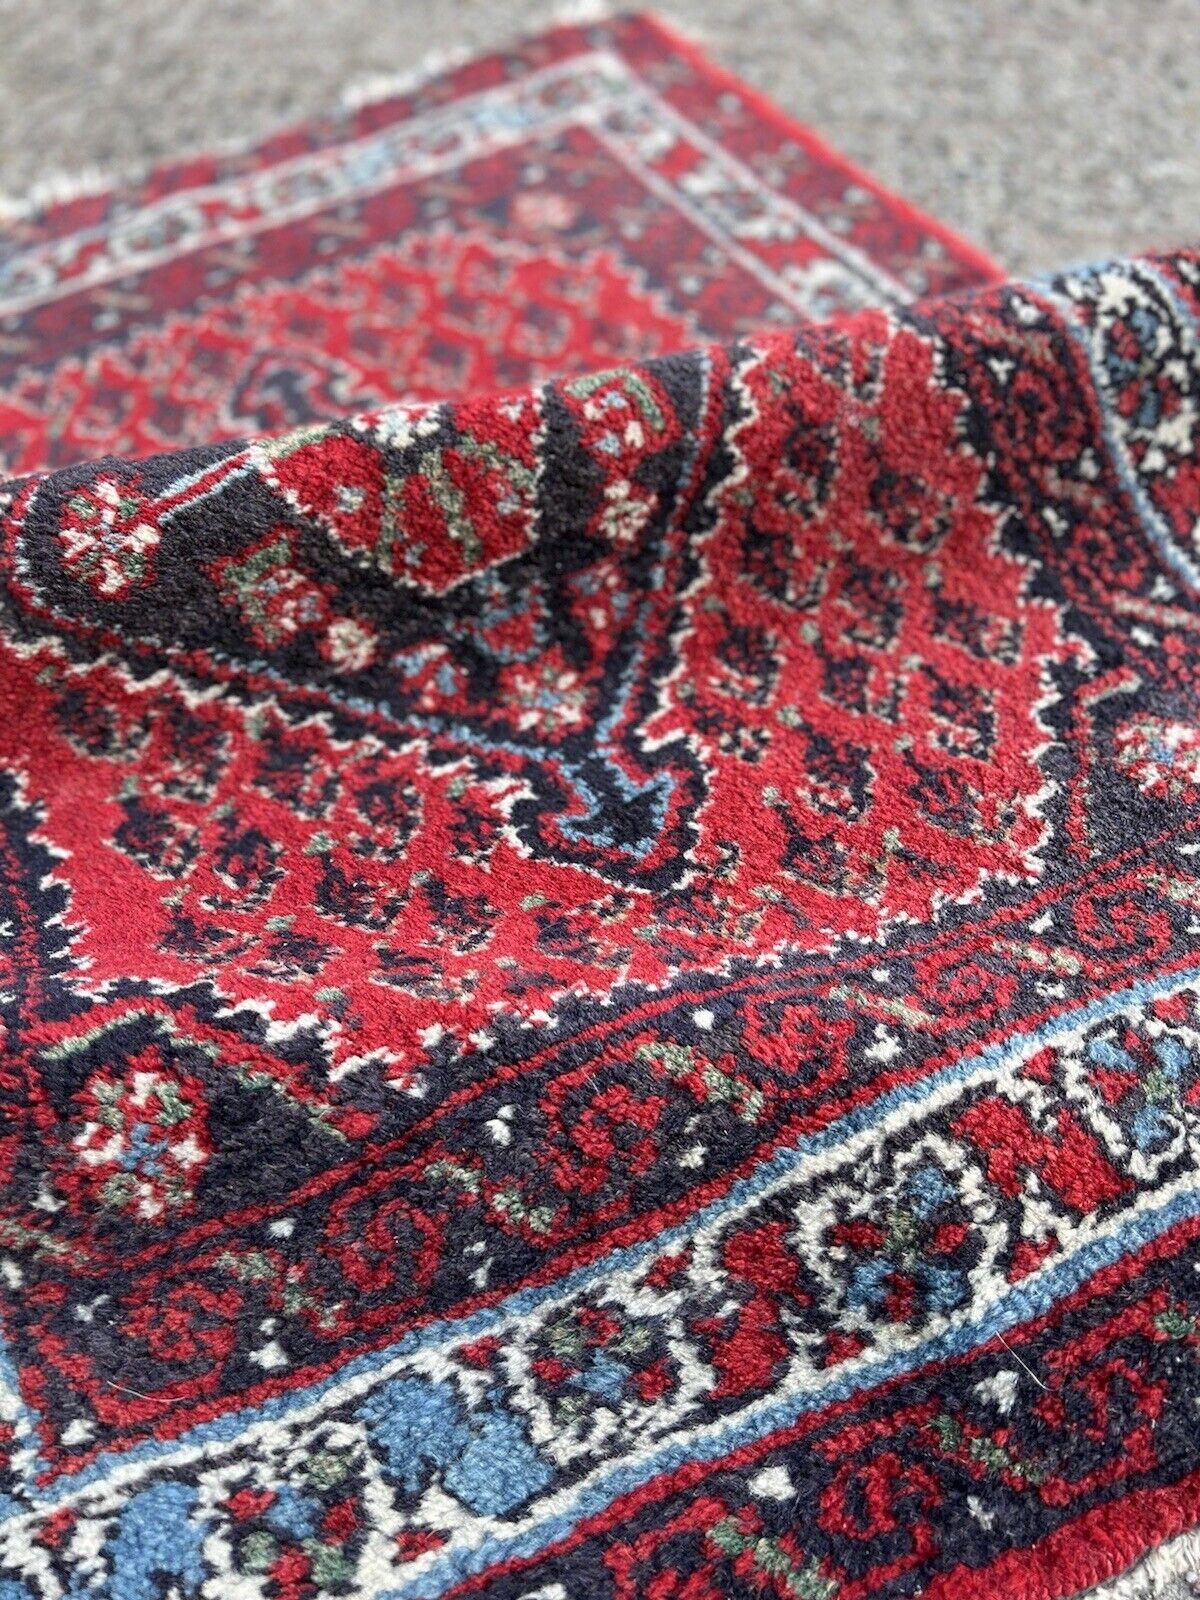 Late 20th Century Handmade Vintage Persian Style Hamadan Rug 2.1' x 2.9', 1970s - 1S35 For Sale